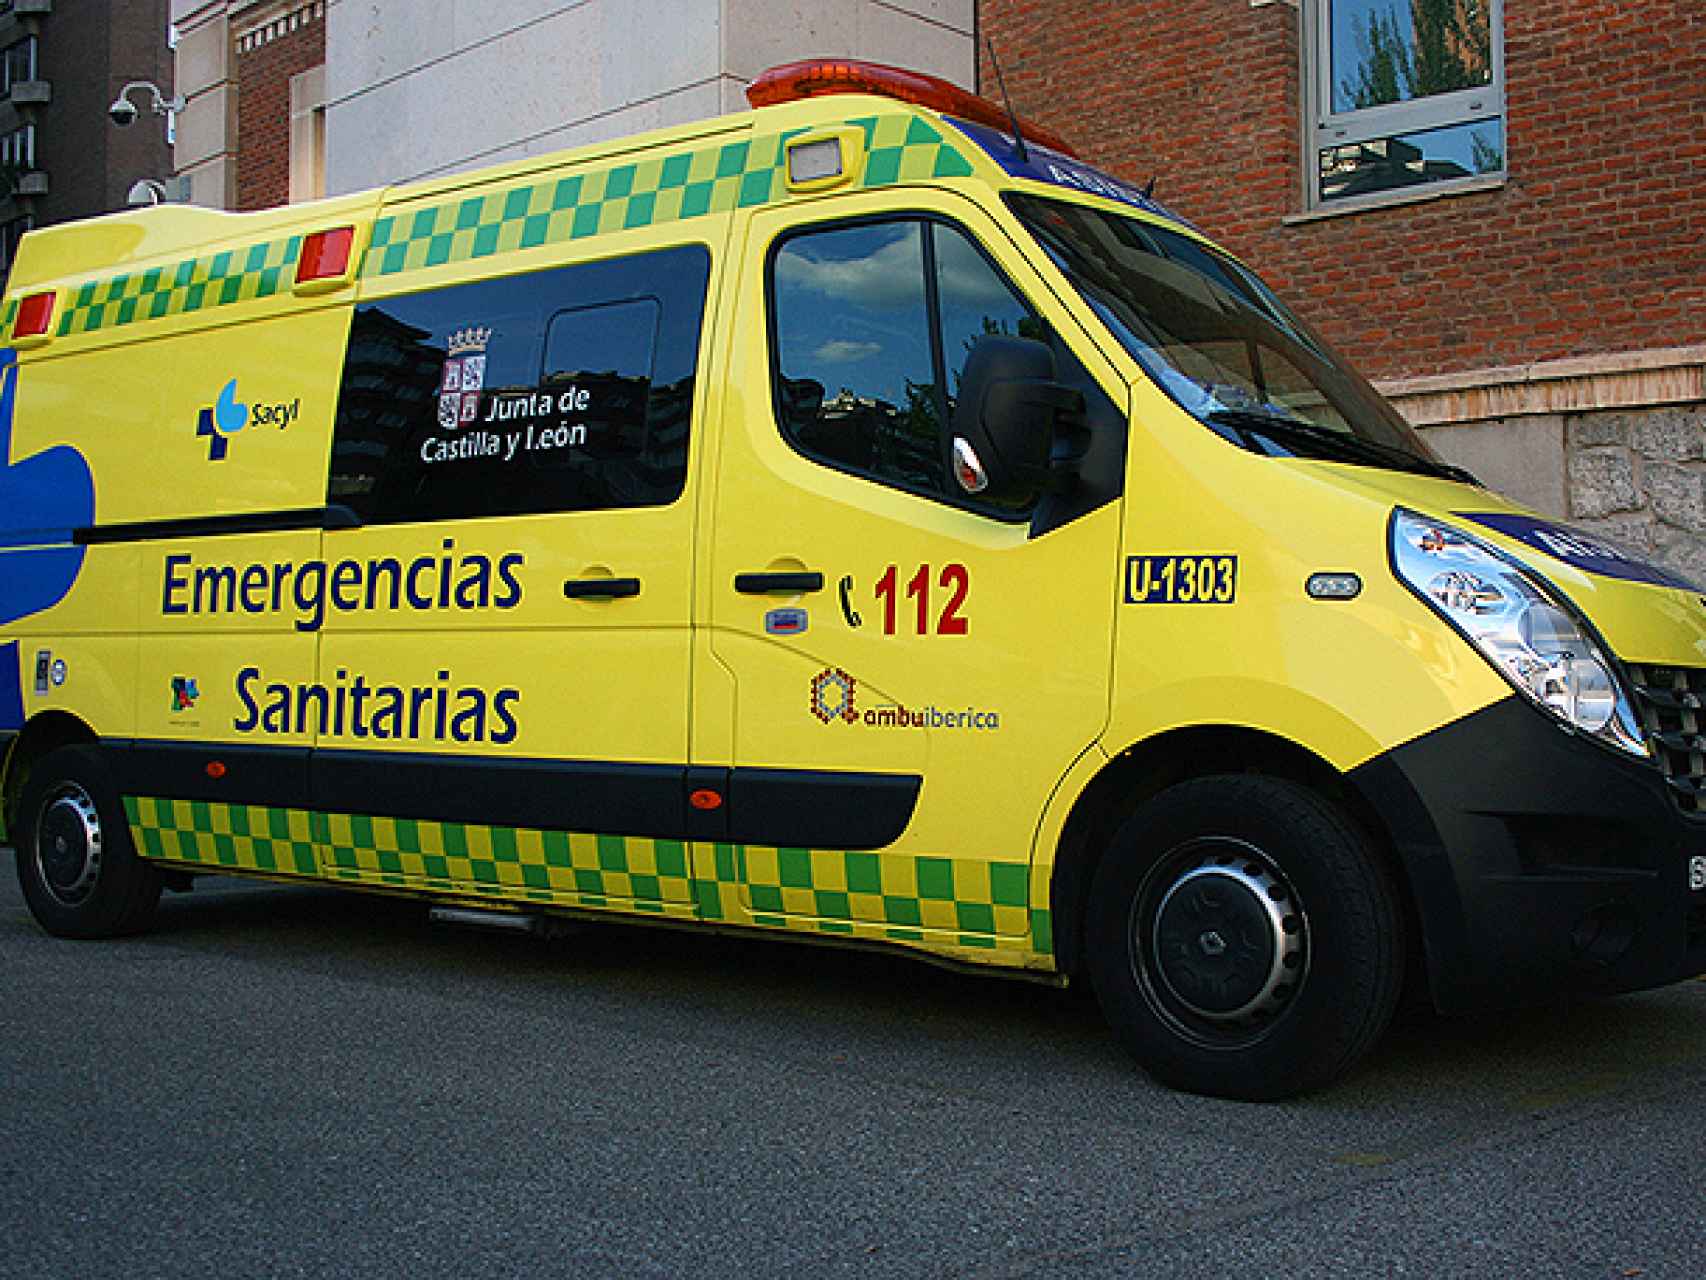 Ambulancia medicalizada del Sacyl